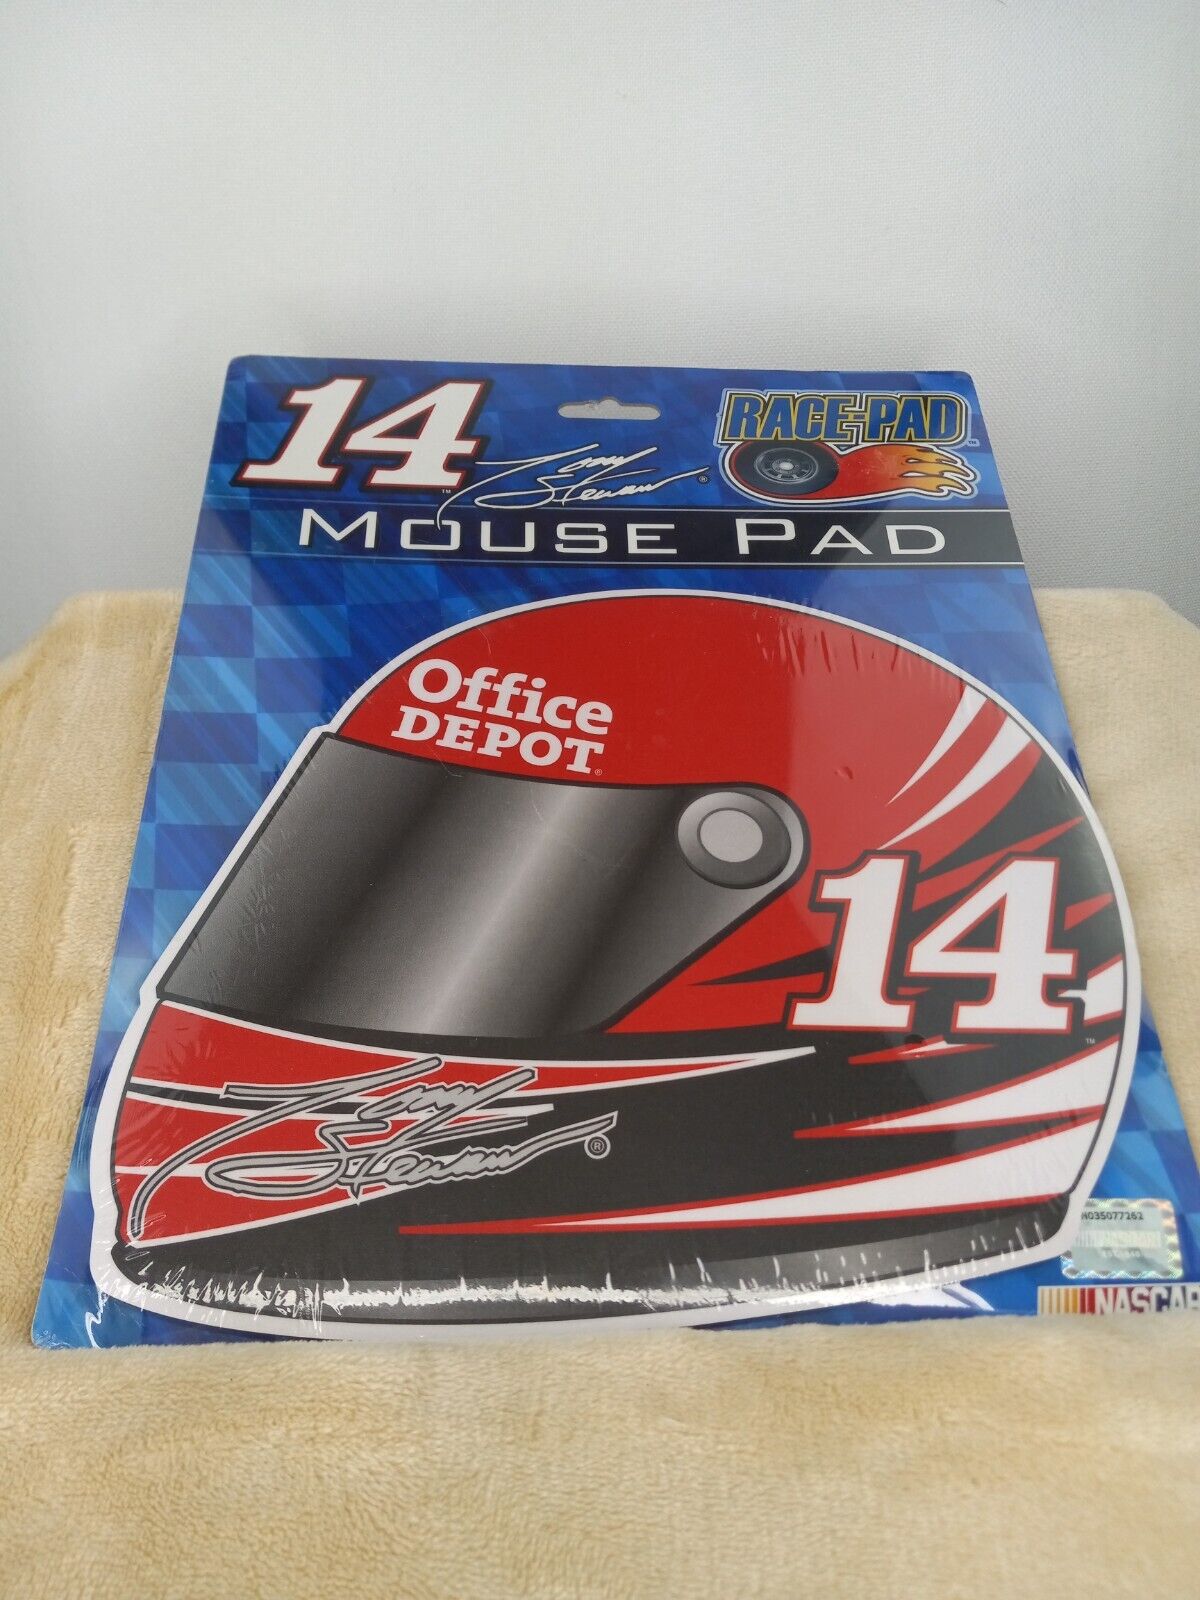 Nascar Race-Pad Helmet Mouse Pad Tony Stewart 14...BRAND NEW